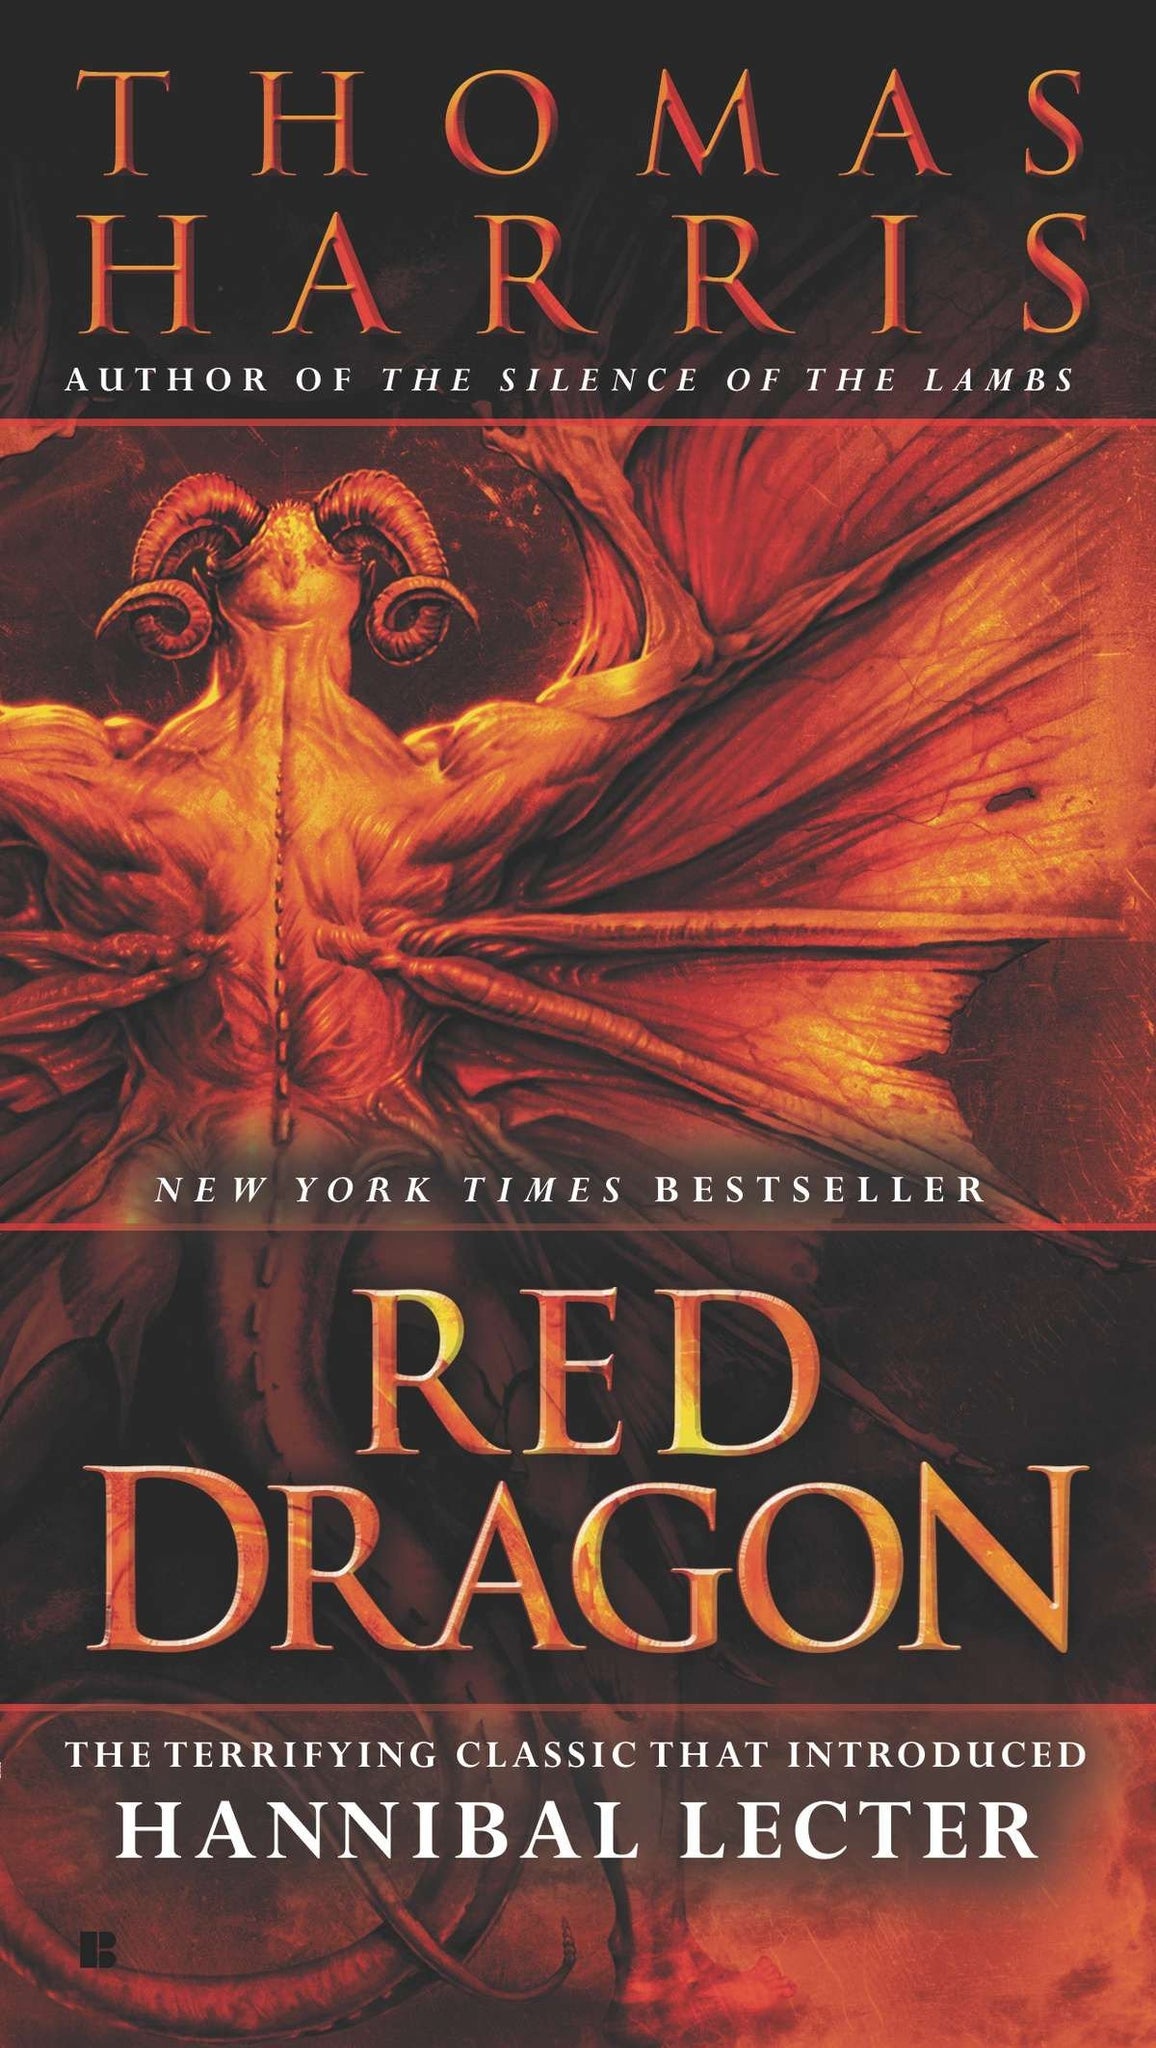 Red Dragon by Thomas Harris - mmpbk